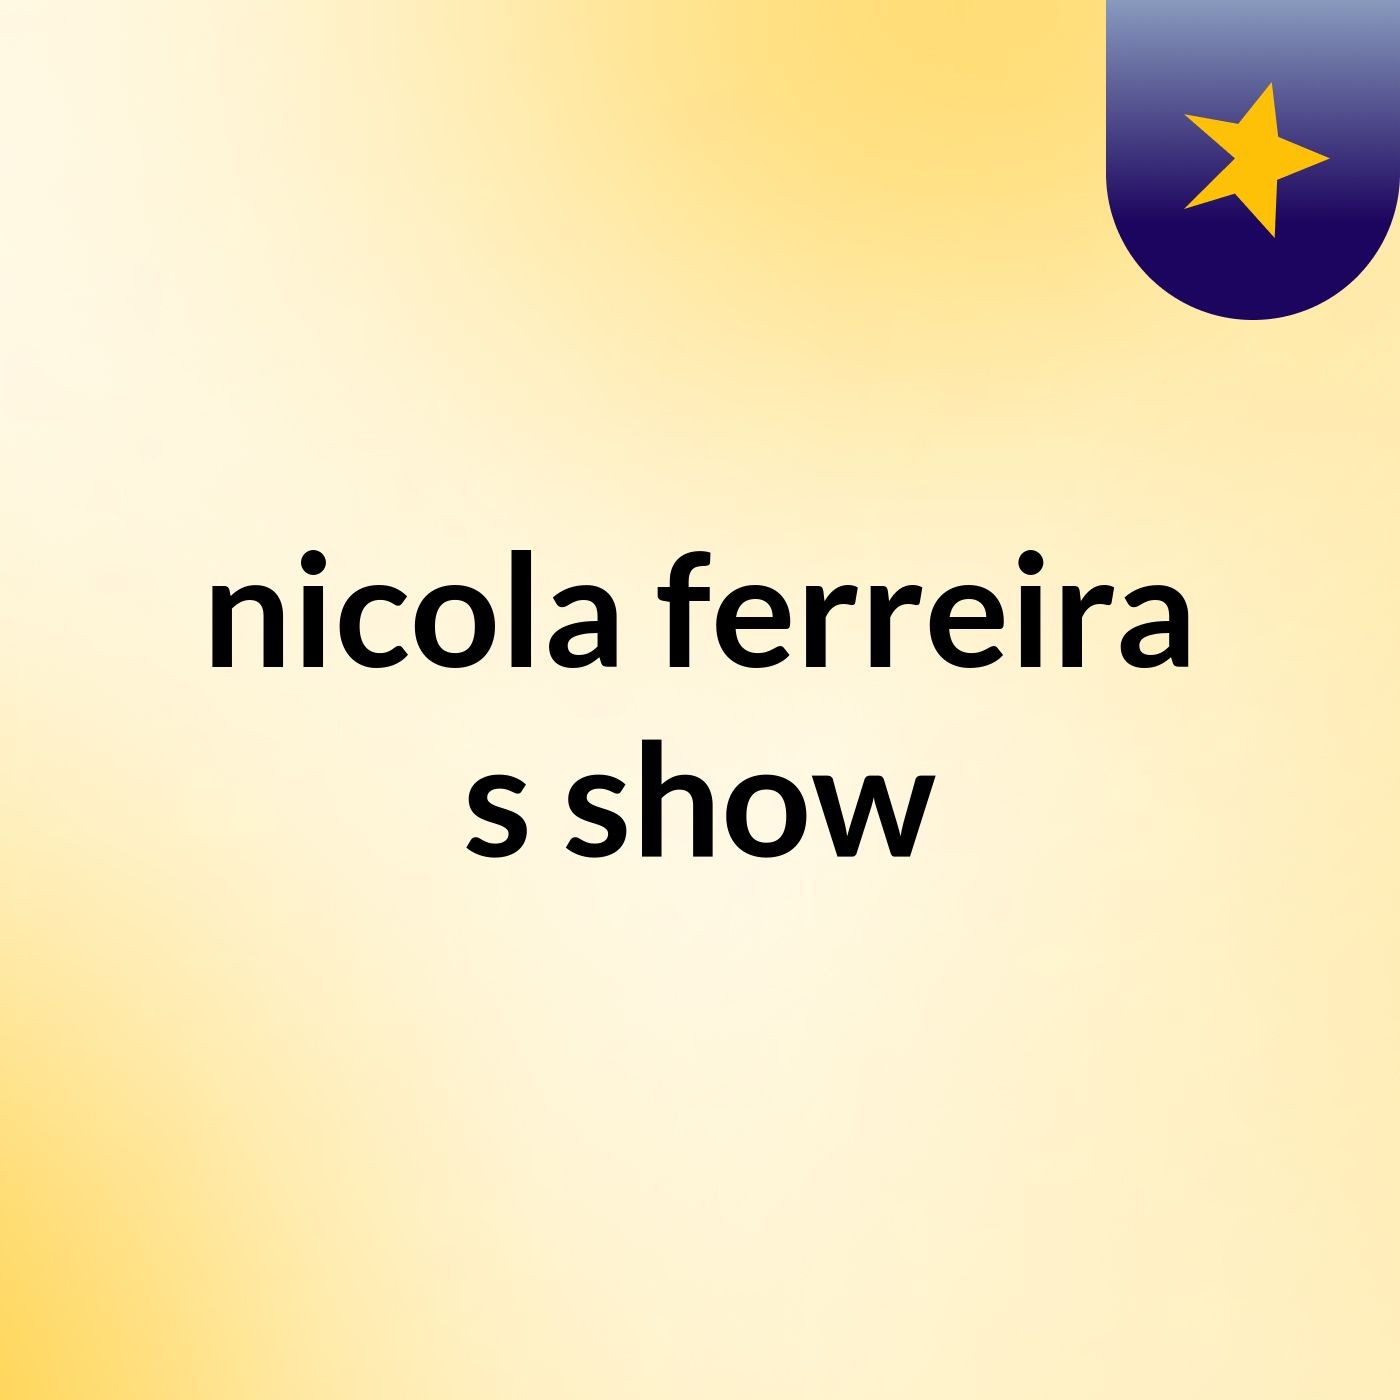 nicola ferreira's show